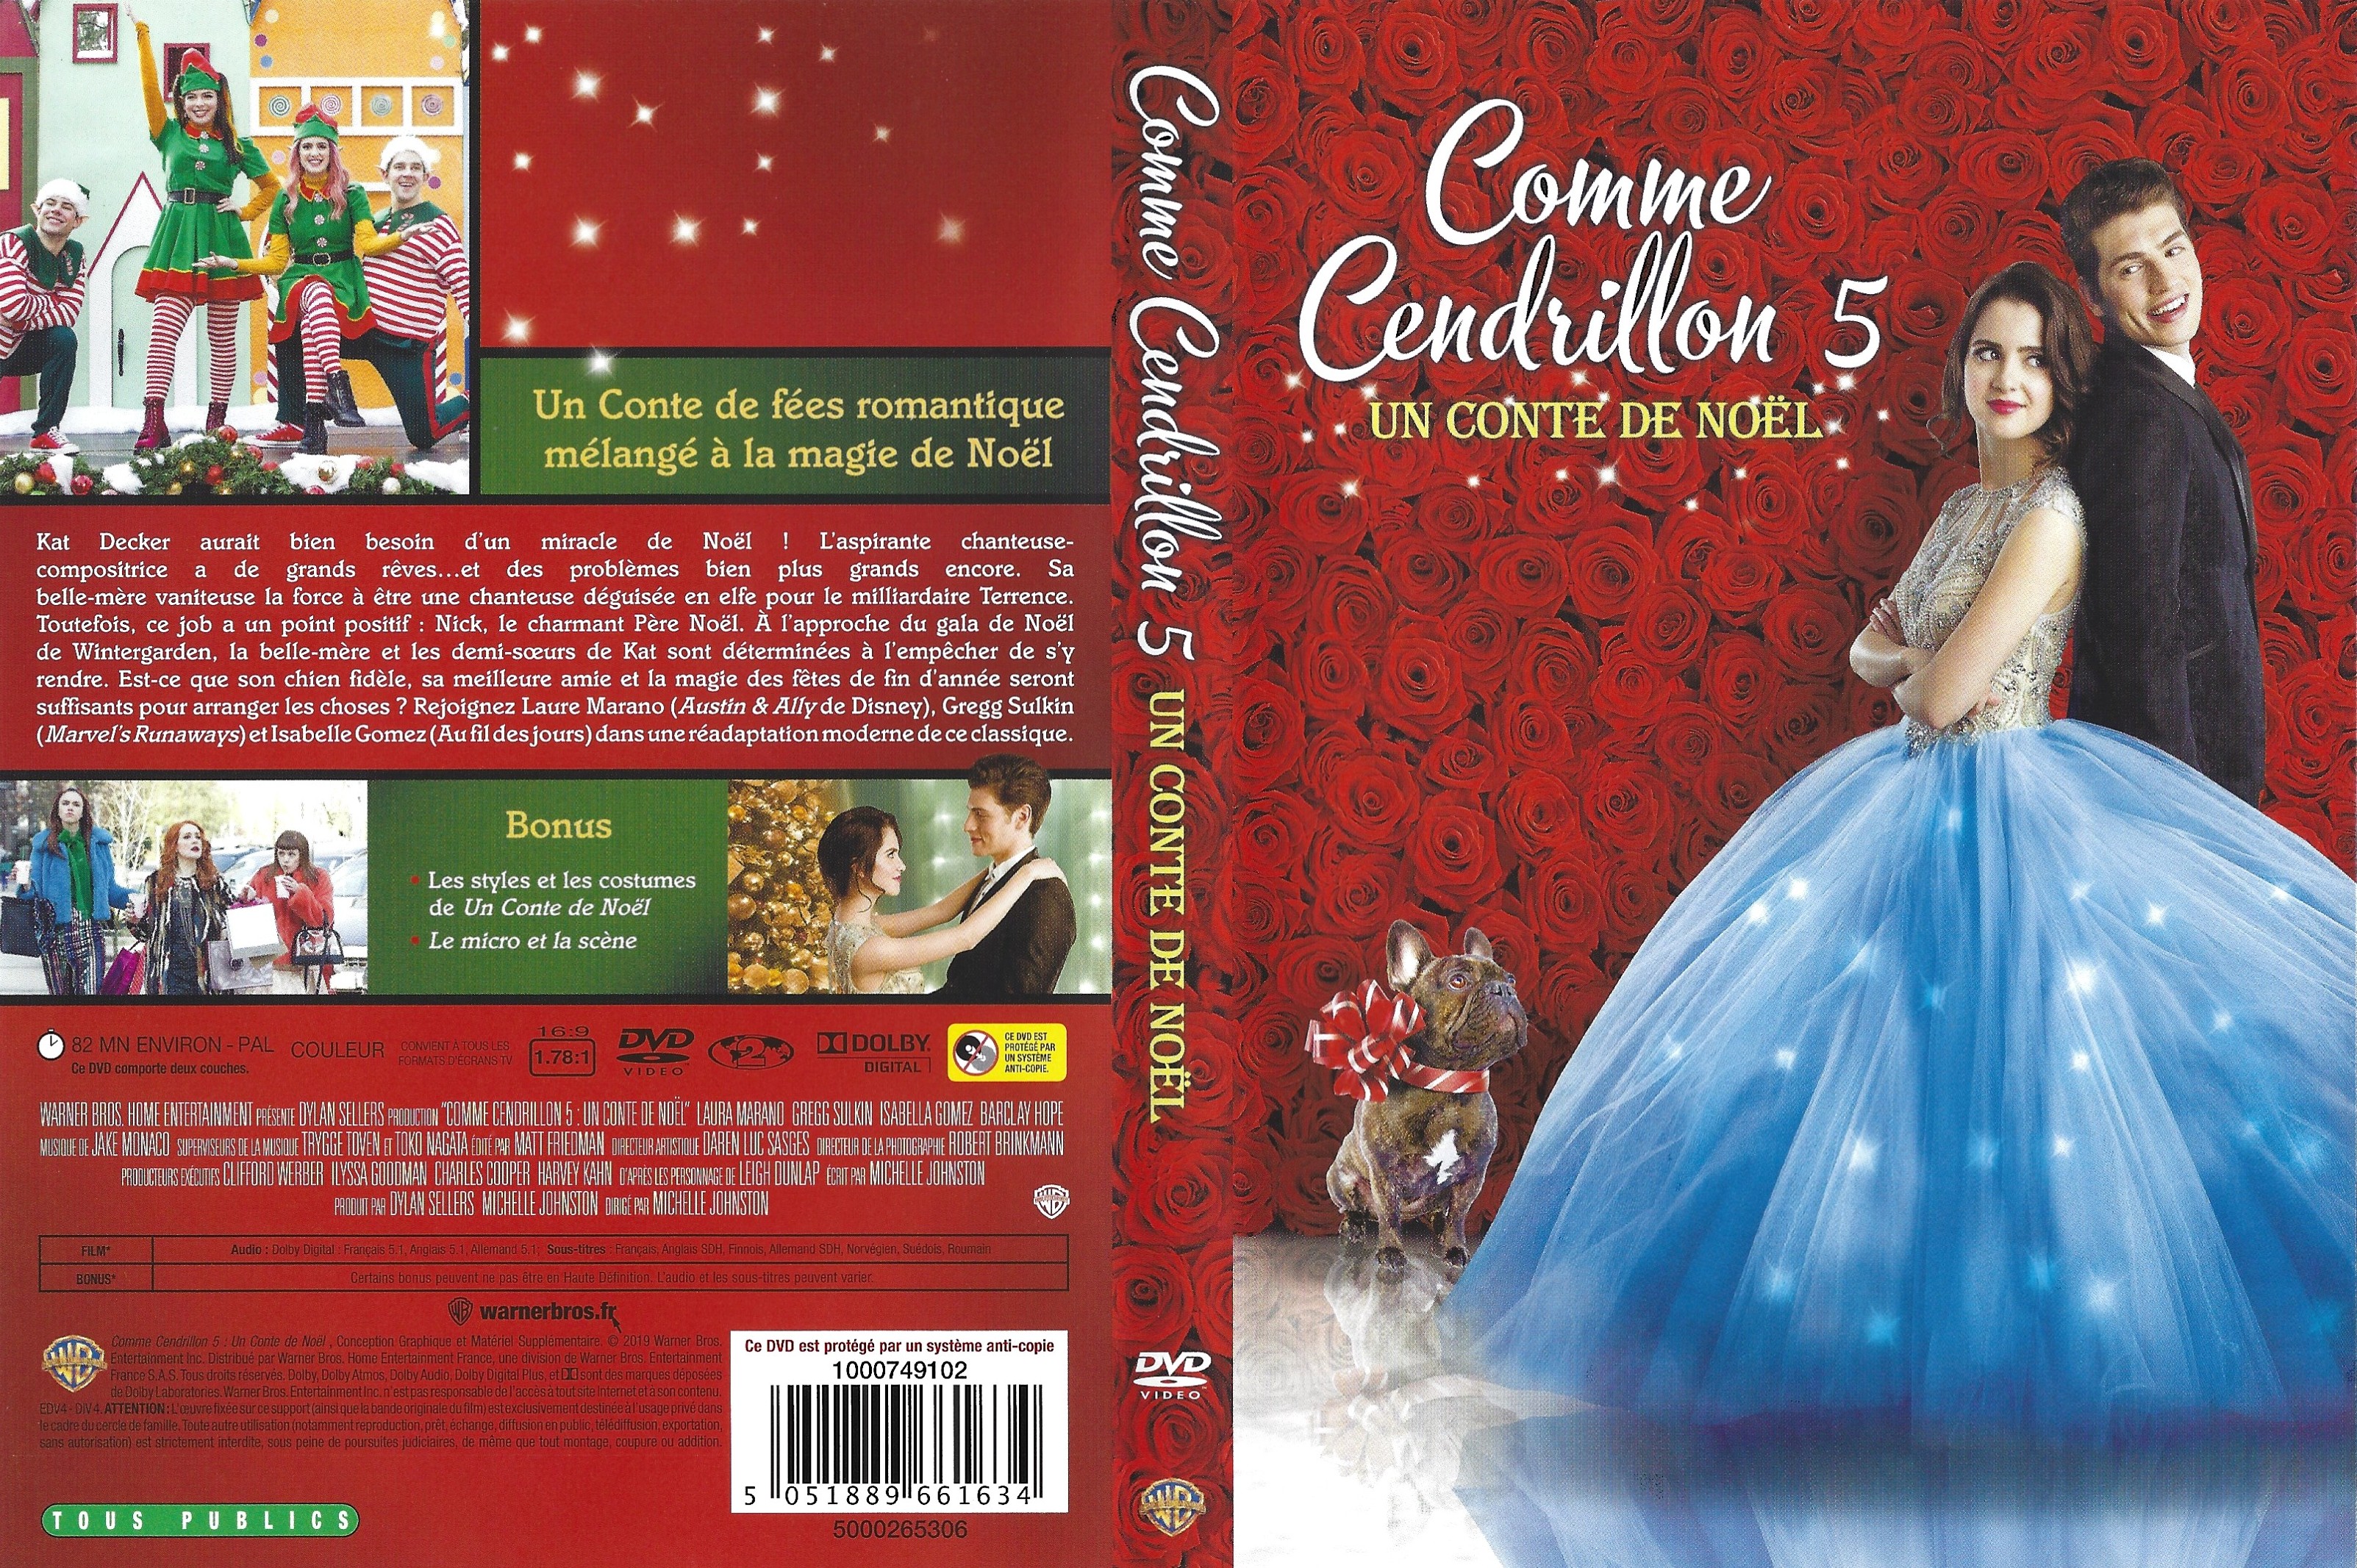 Jaquette DVD Comme Cendrillon 5 Un conte de noel